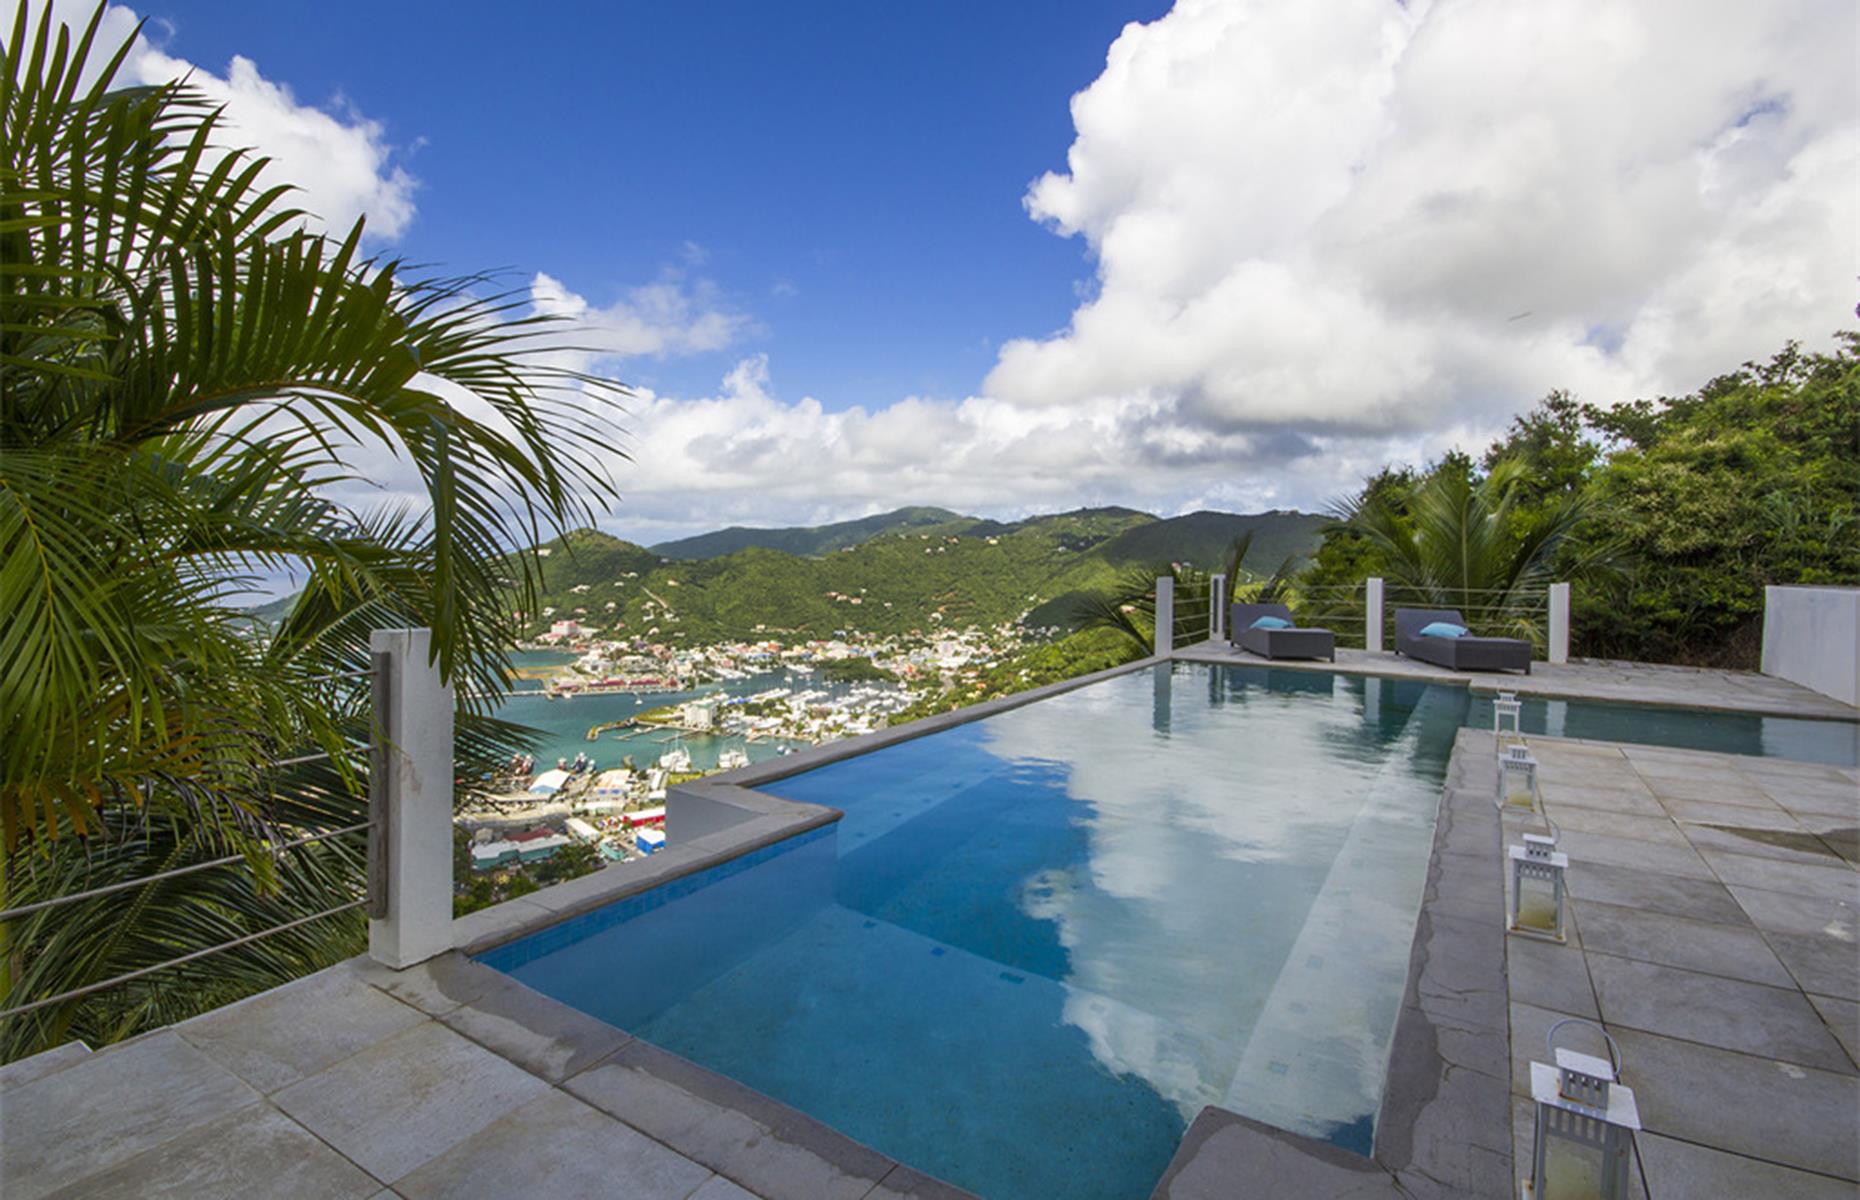 Butu Mountain Villa, Tortola, British Virgin Islands, Caribbean: $845,000 (£622,000)